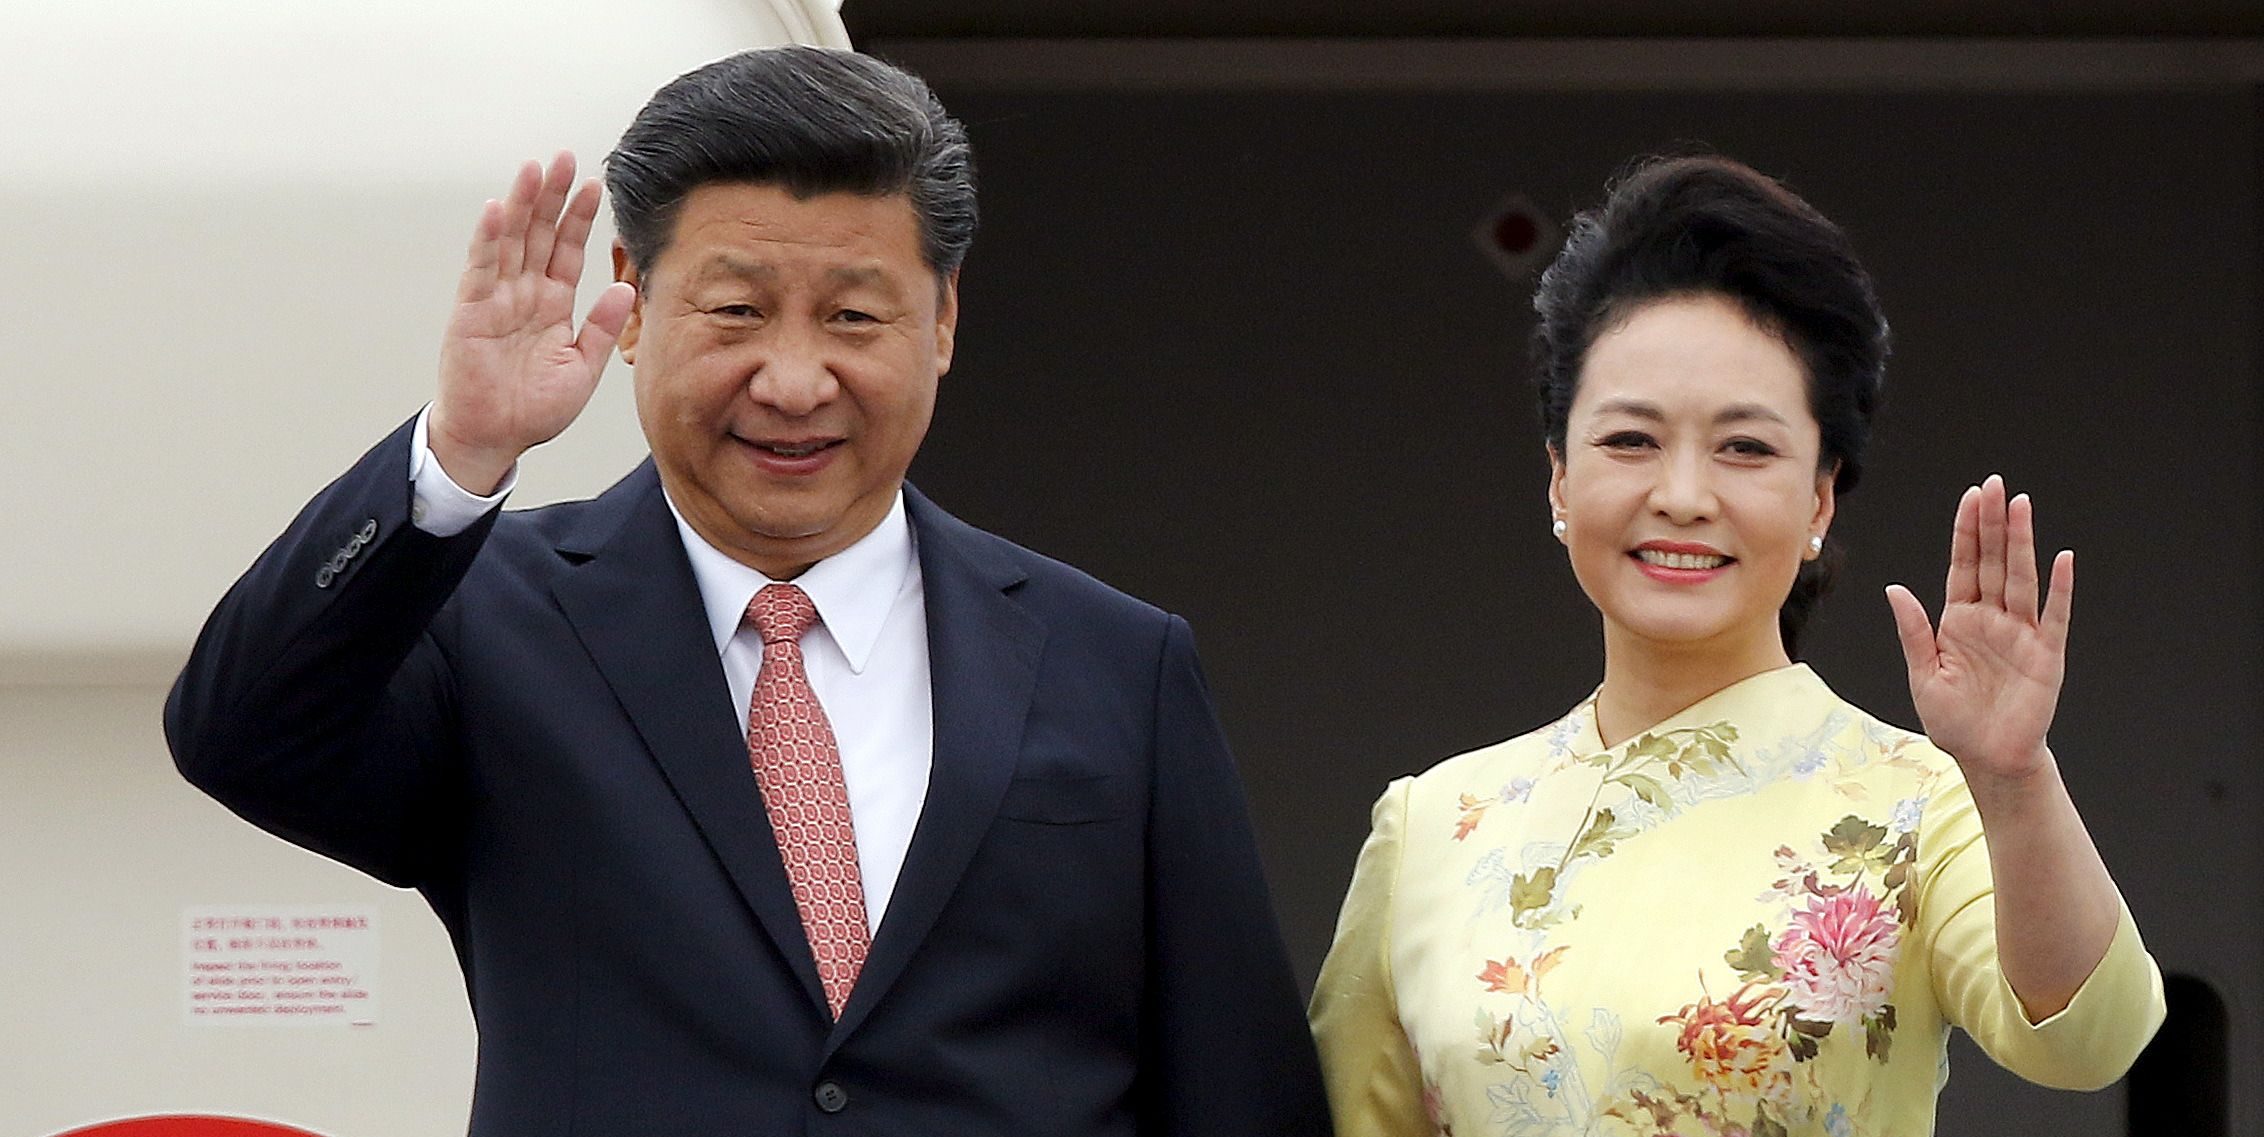 Le président chinois Xi Jinping et son épouse Peng Liyuan. Source : Newsweek)